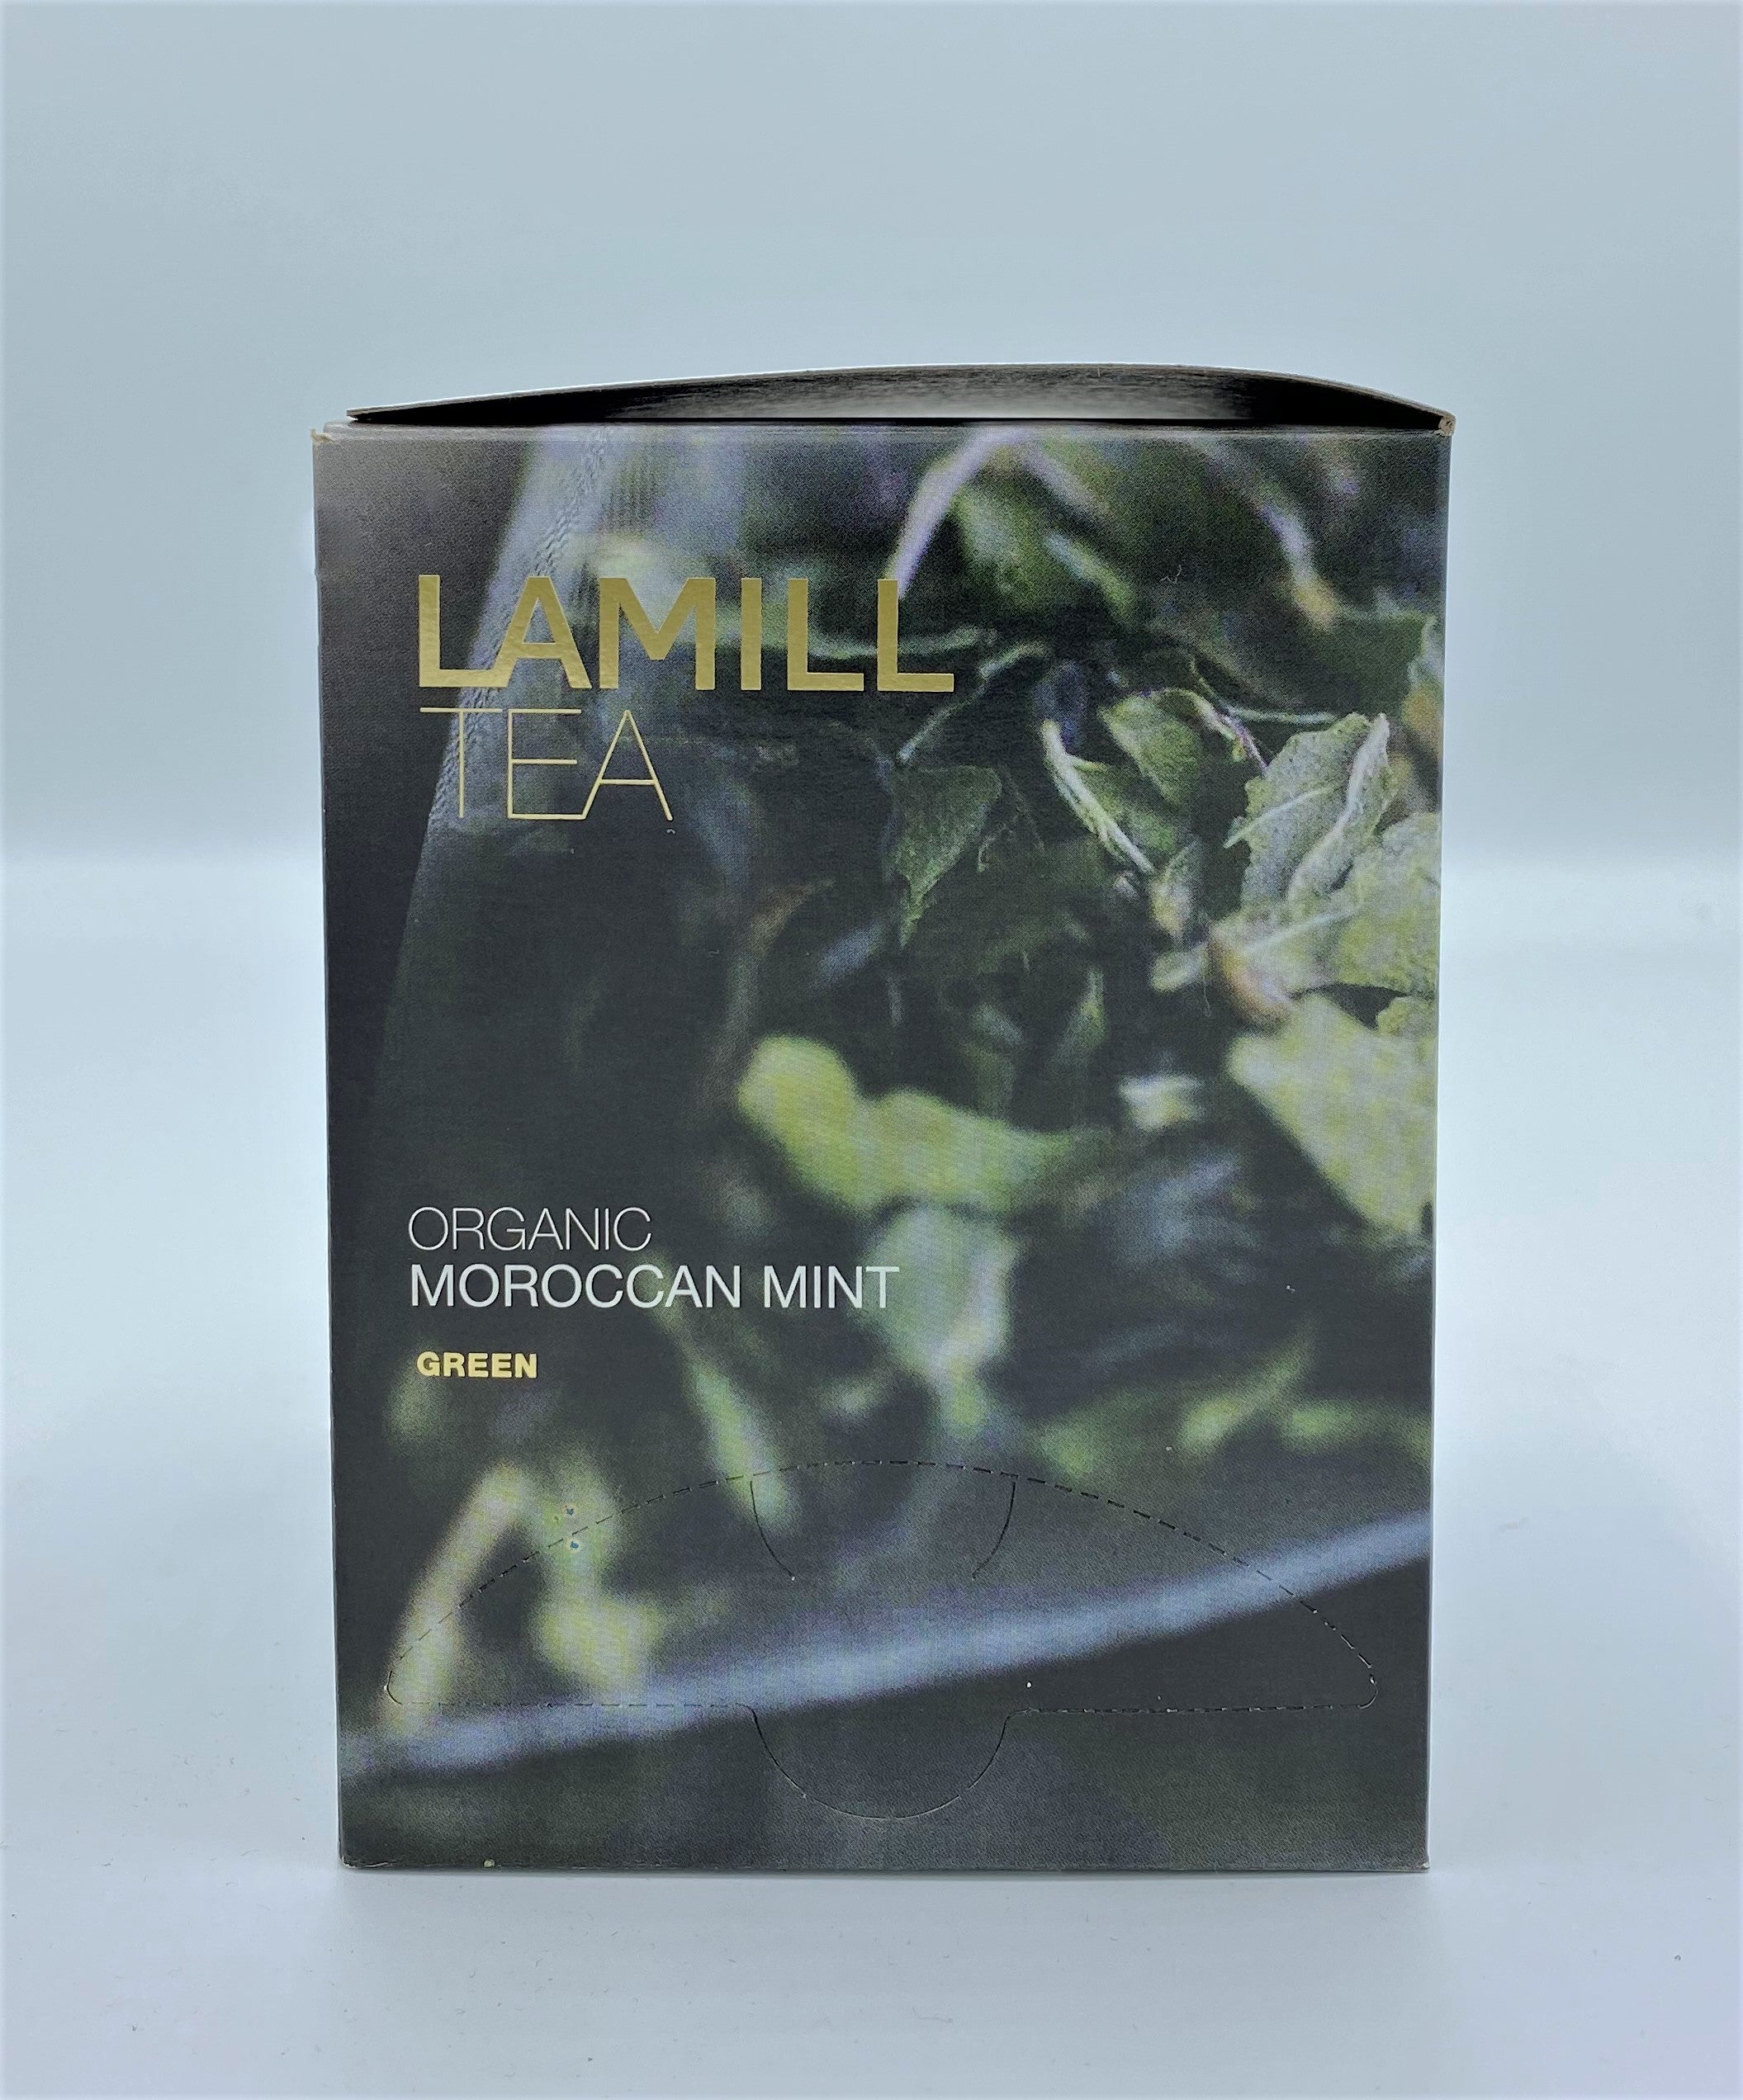 Lamill Tea, Organic Moroccan Mint, Green, 15 tea bags